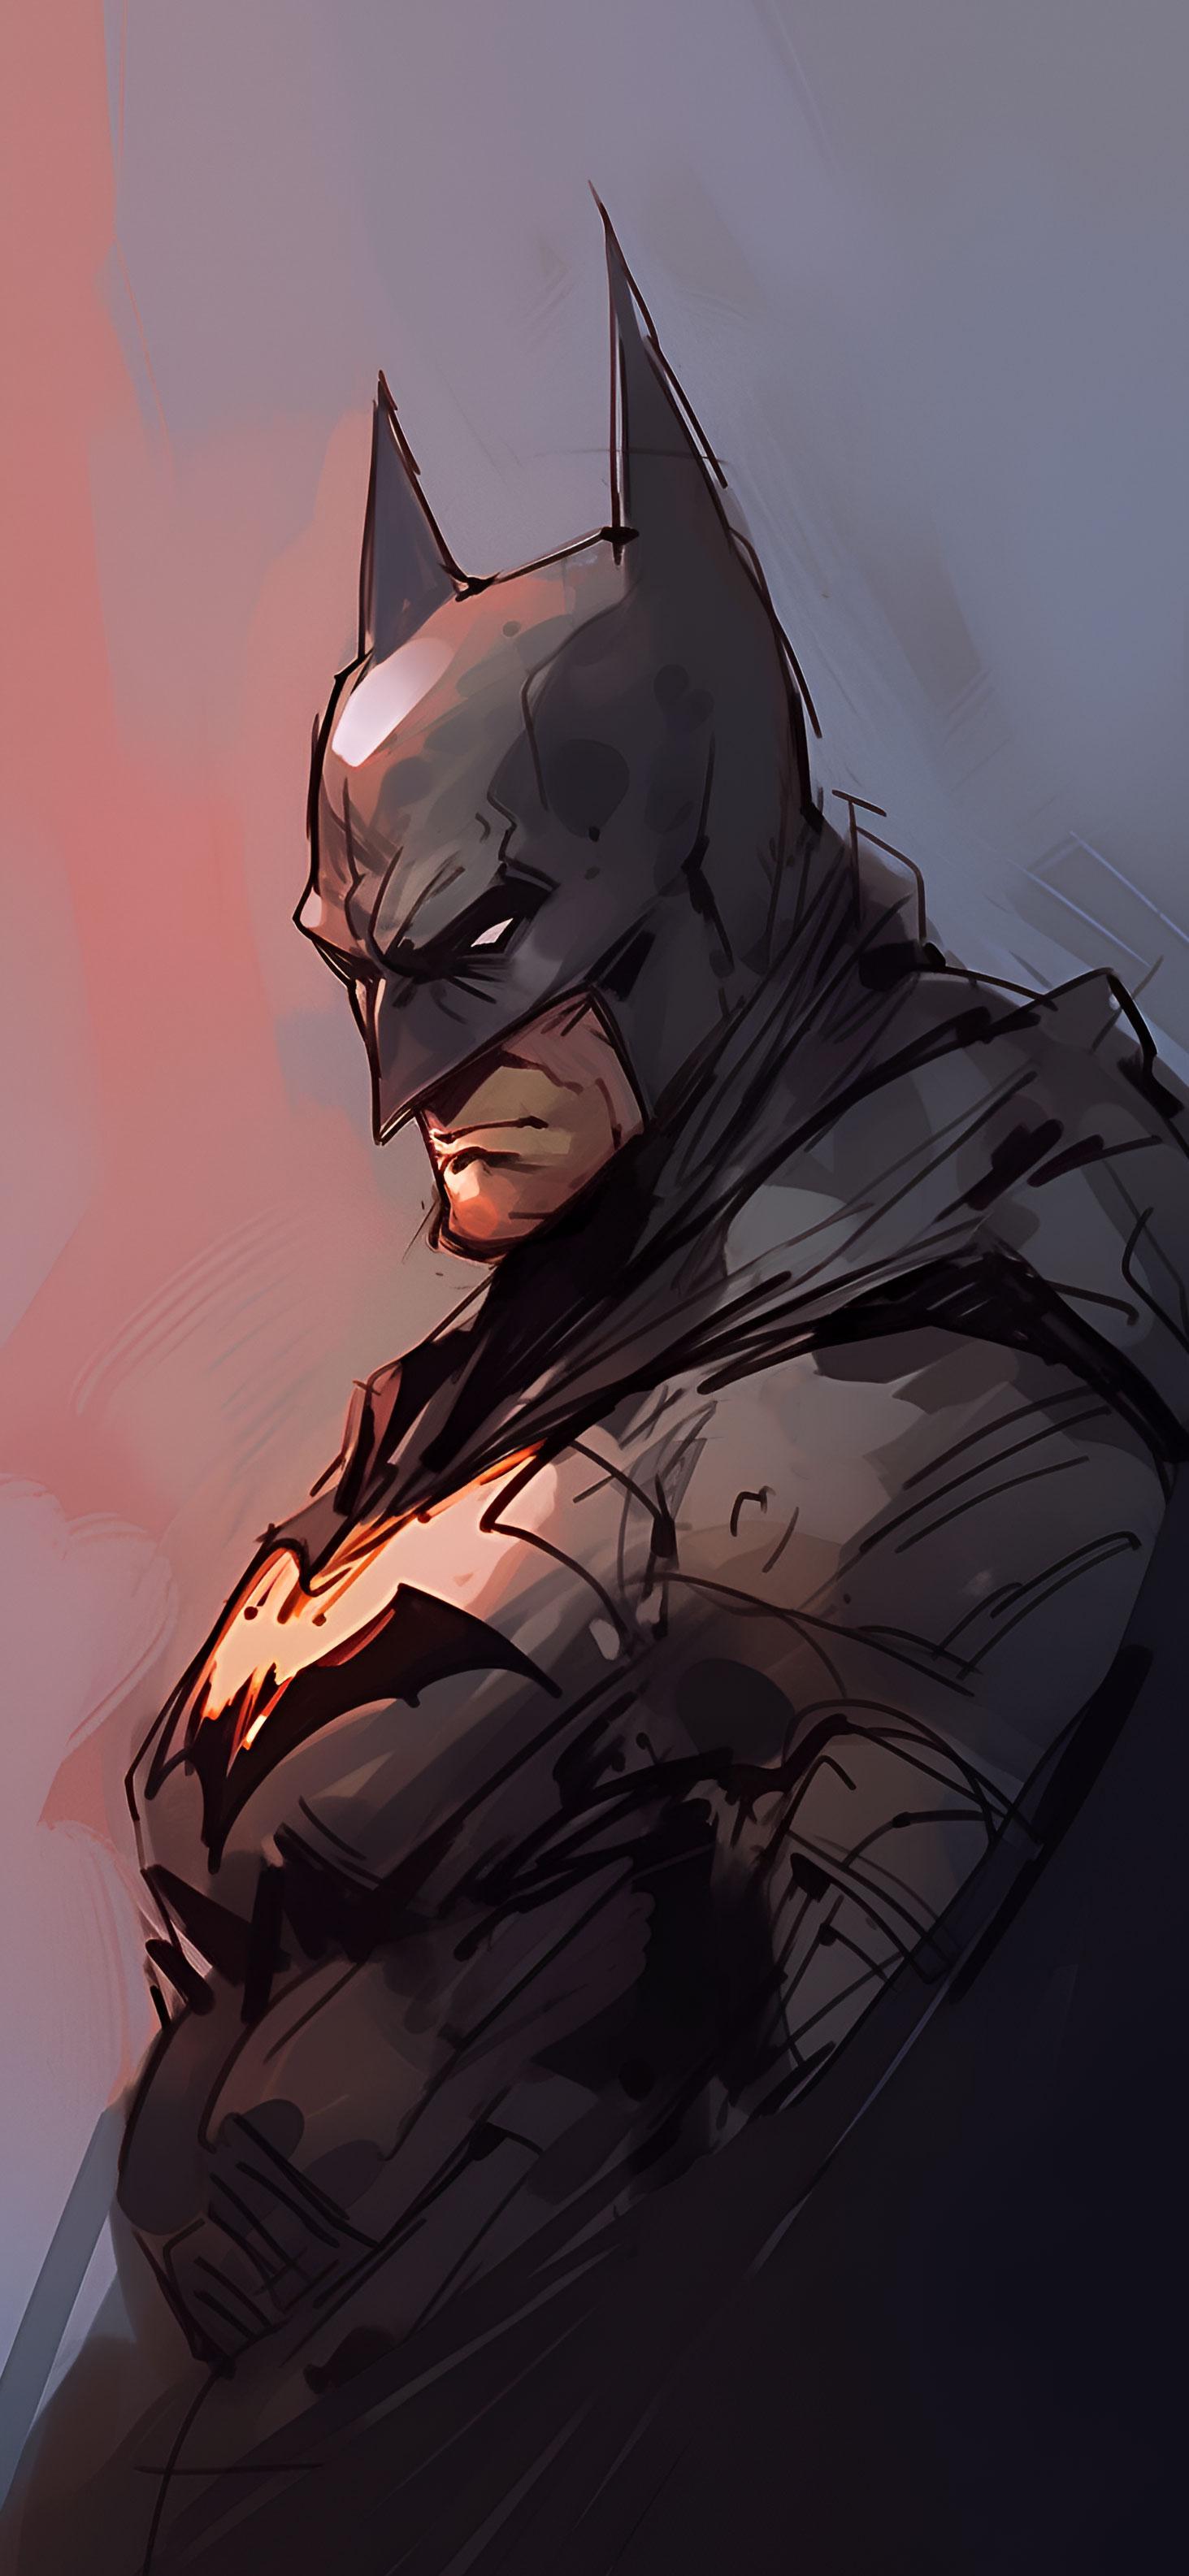 Gritty Batman Aesthetic Sketch Wallpaper Superhero